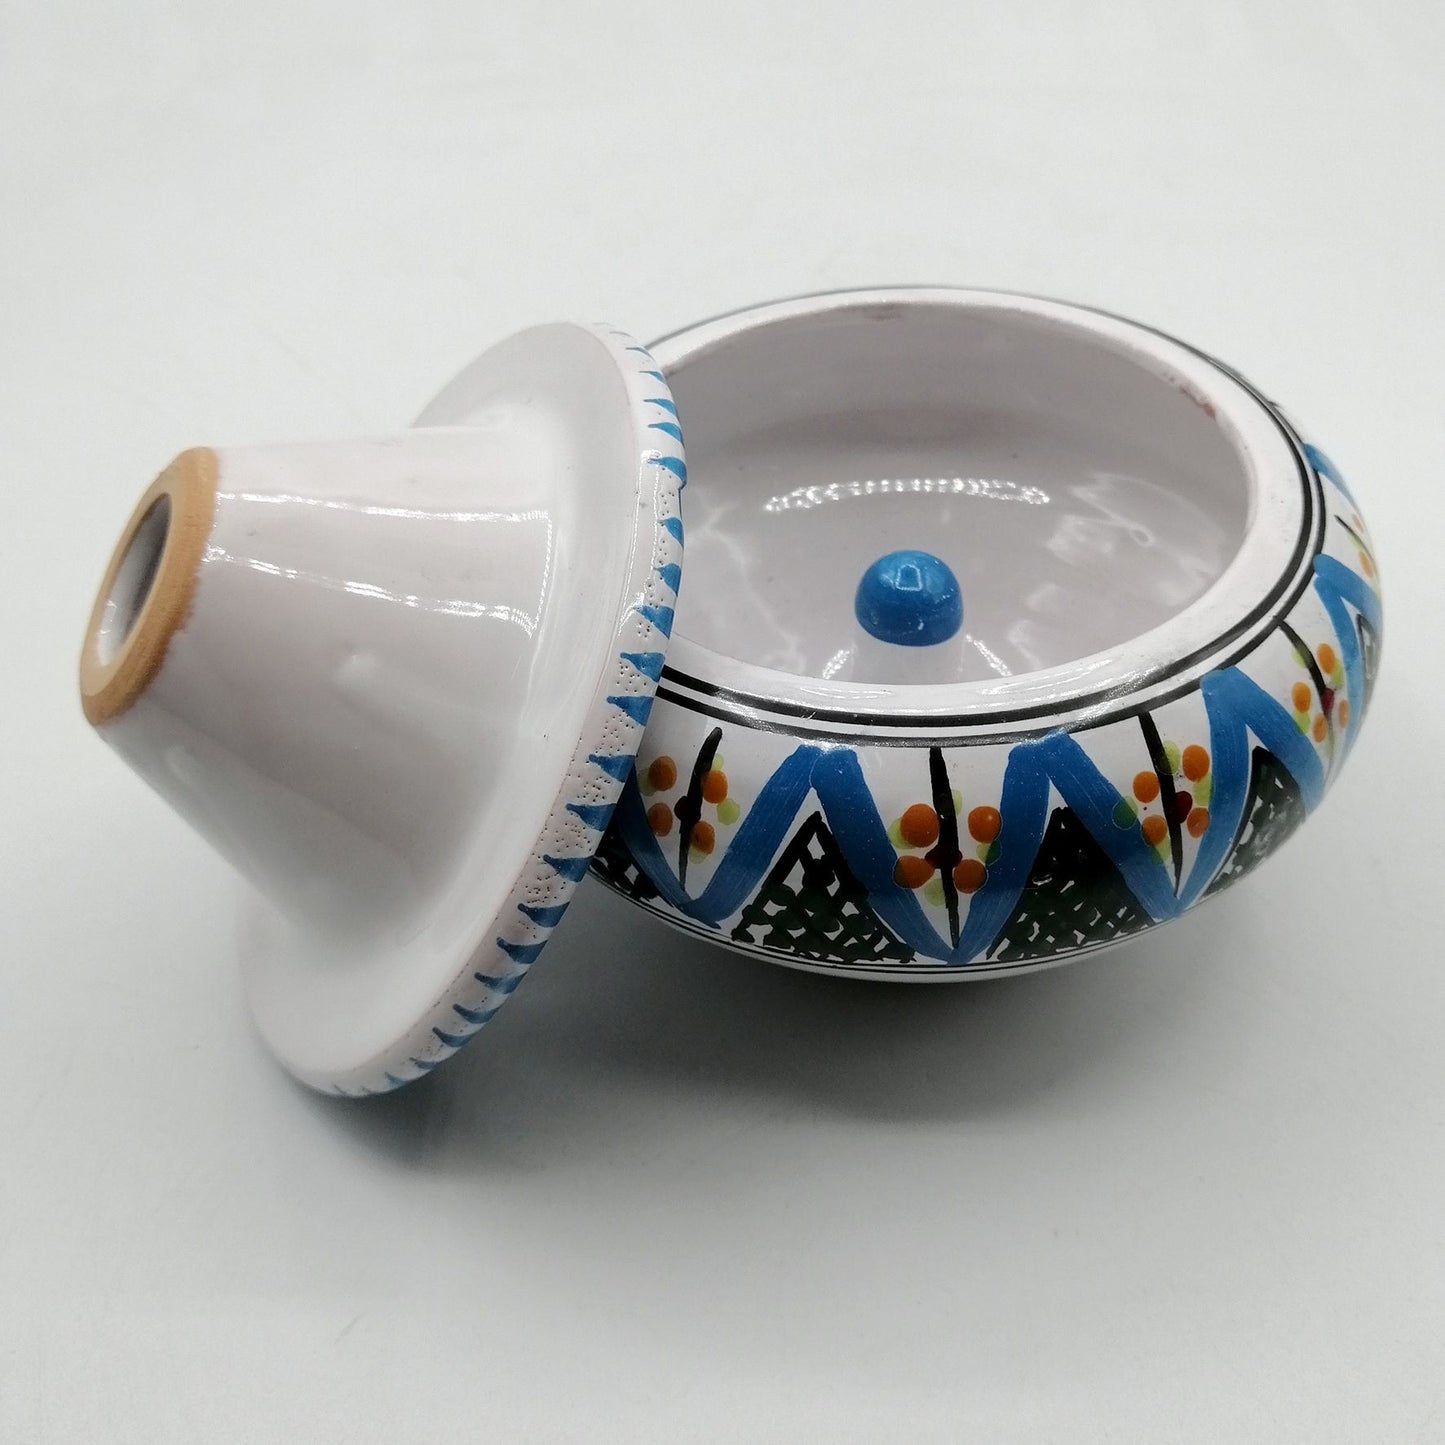 Etnico Arredo Posacenere Ceramica Antiodore Tunisina Marocchina 1211201105